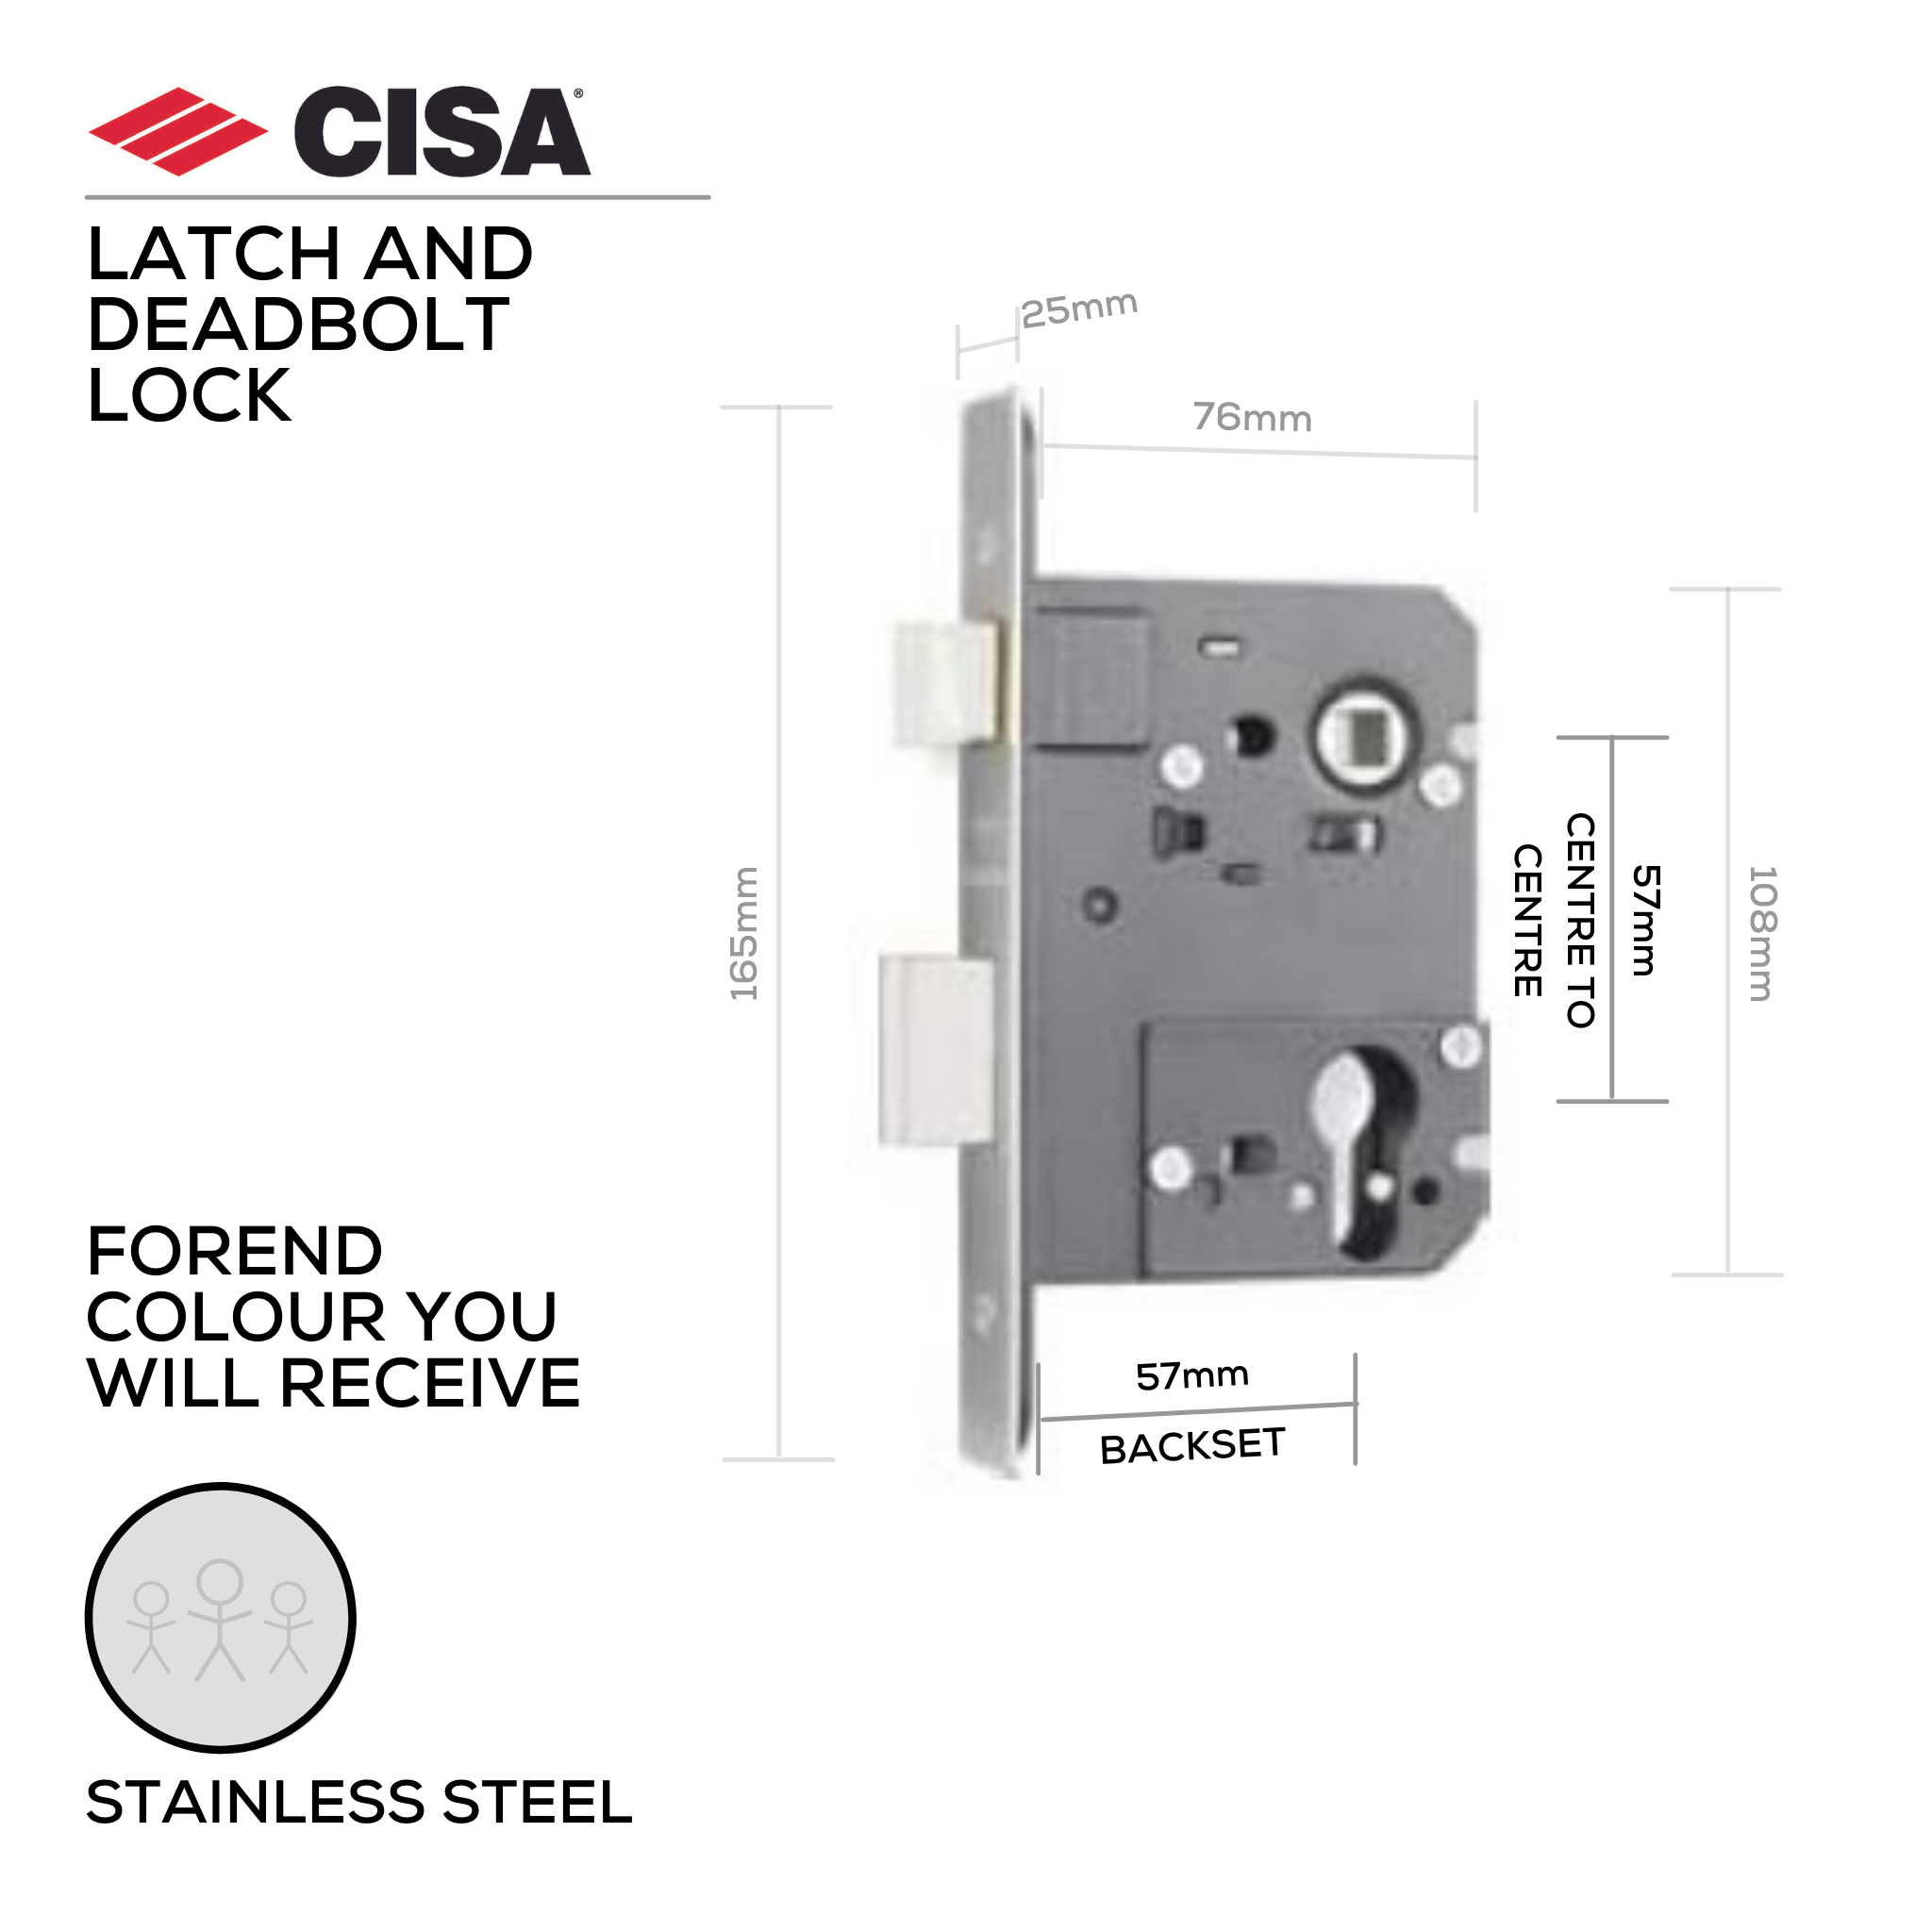 55220-57-20, Latch & Deadbolt Lock, Euro Cylinder, Excluding Cylinder, 57mm (Backset), 57mm (ctc), Stainless Steel, CISA